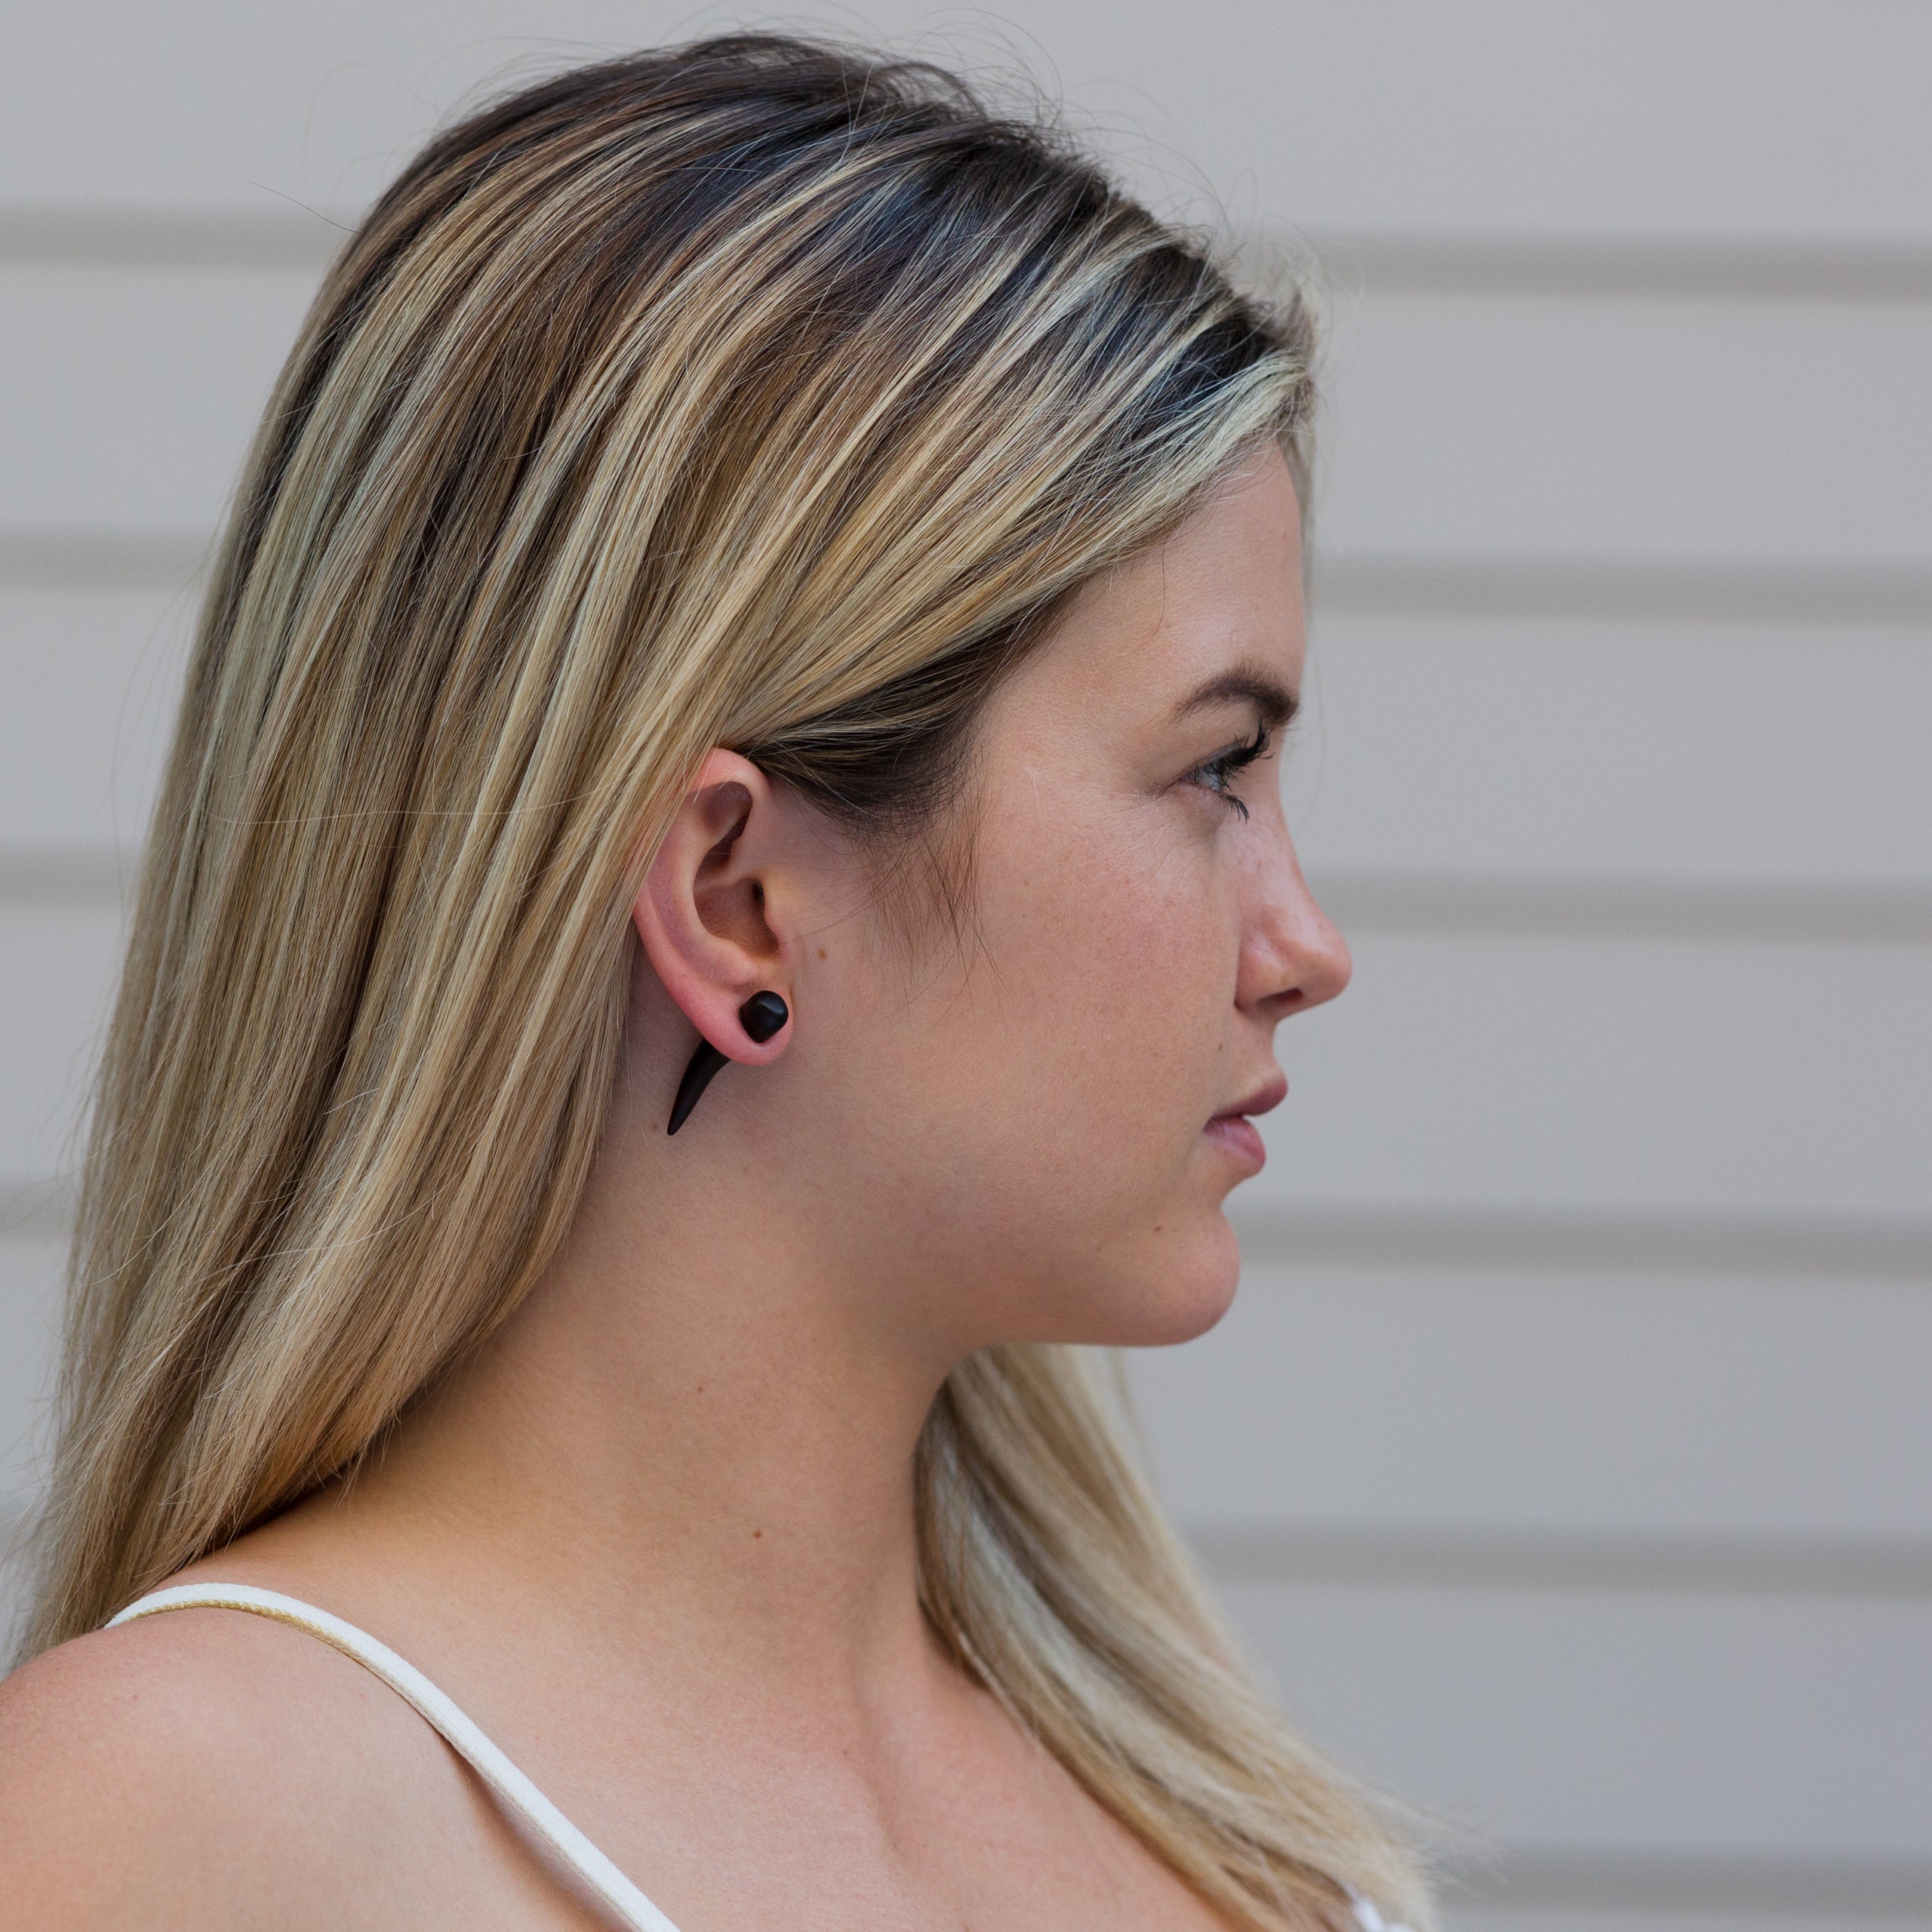 MODRSA Fake Gauges Earrings for Men Screw Flat Back Disc Stud Earrings  Round Cheater Plugs Ear Tunnel Punk Style Dumbell Ear Piercing Black Silver  16g 18g 6mm, Metal : Amazon.co.uk: Fashion